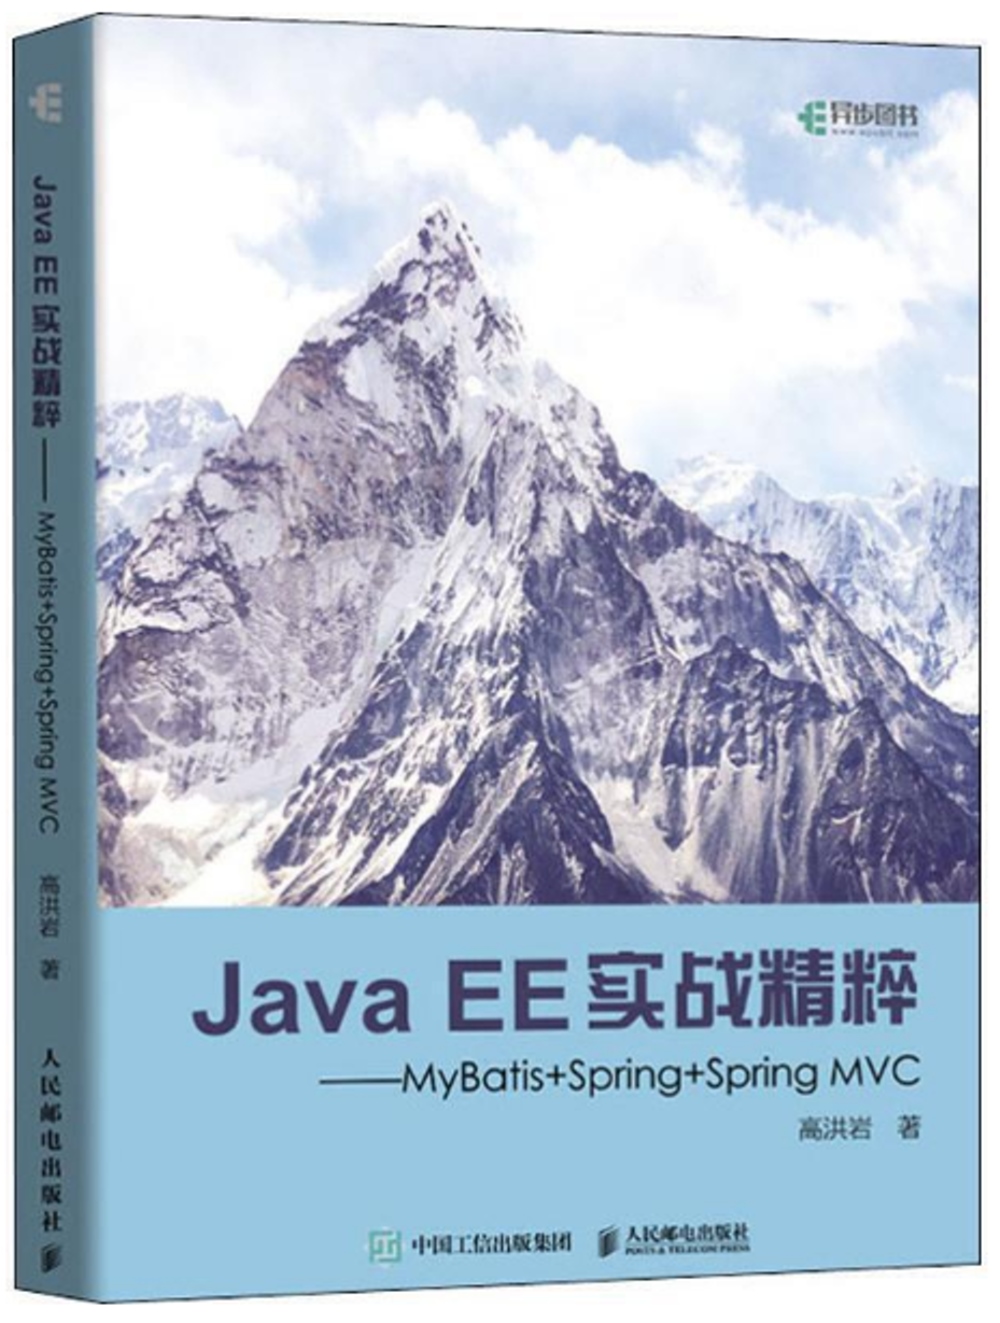 Java EE實戰精粹 MyBatis+Spring+Spring MVC